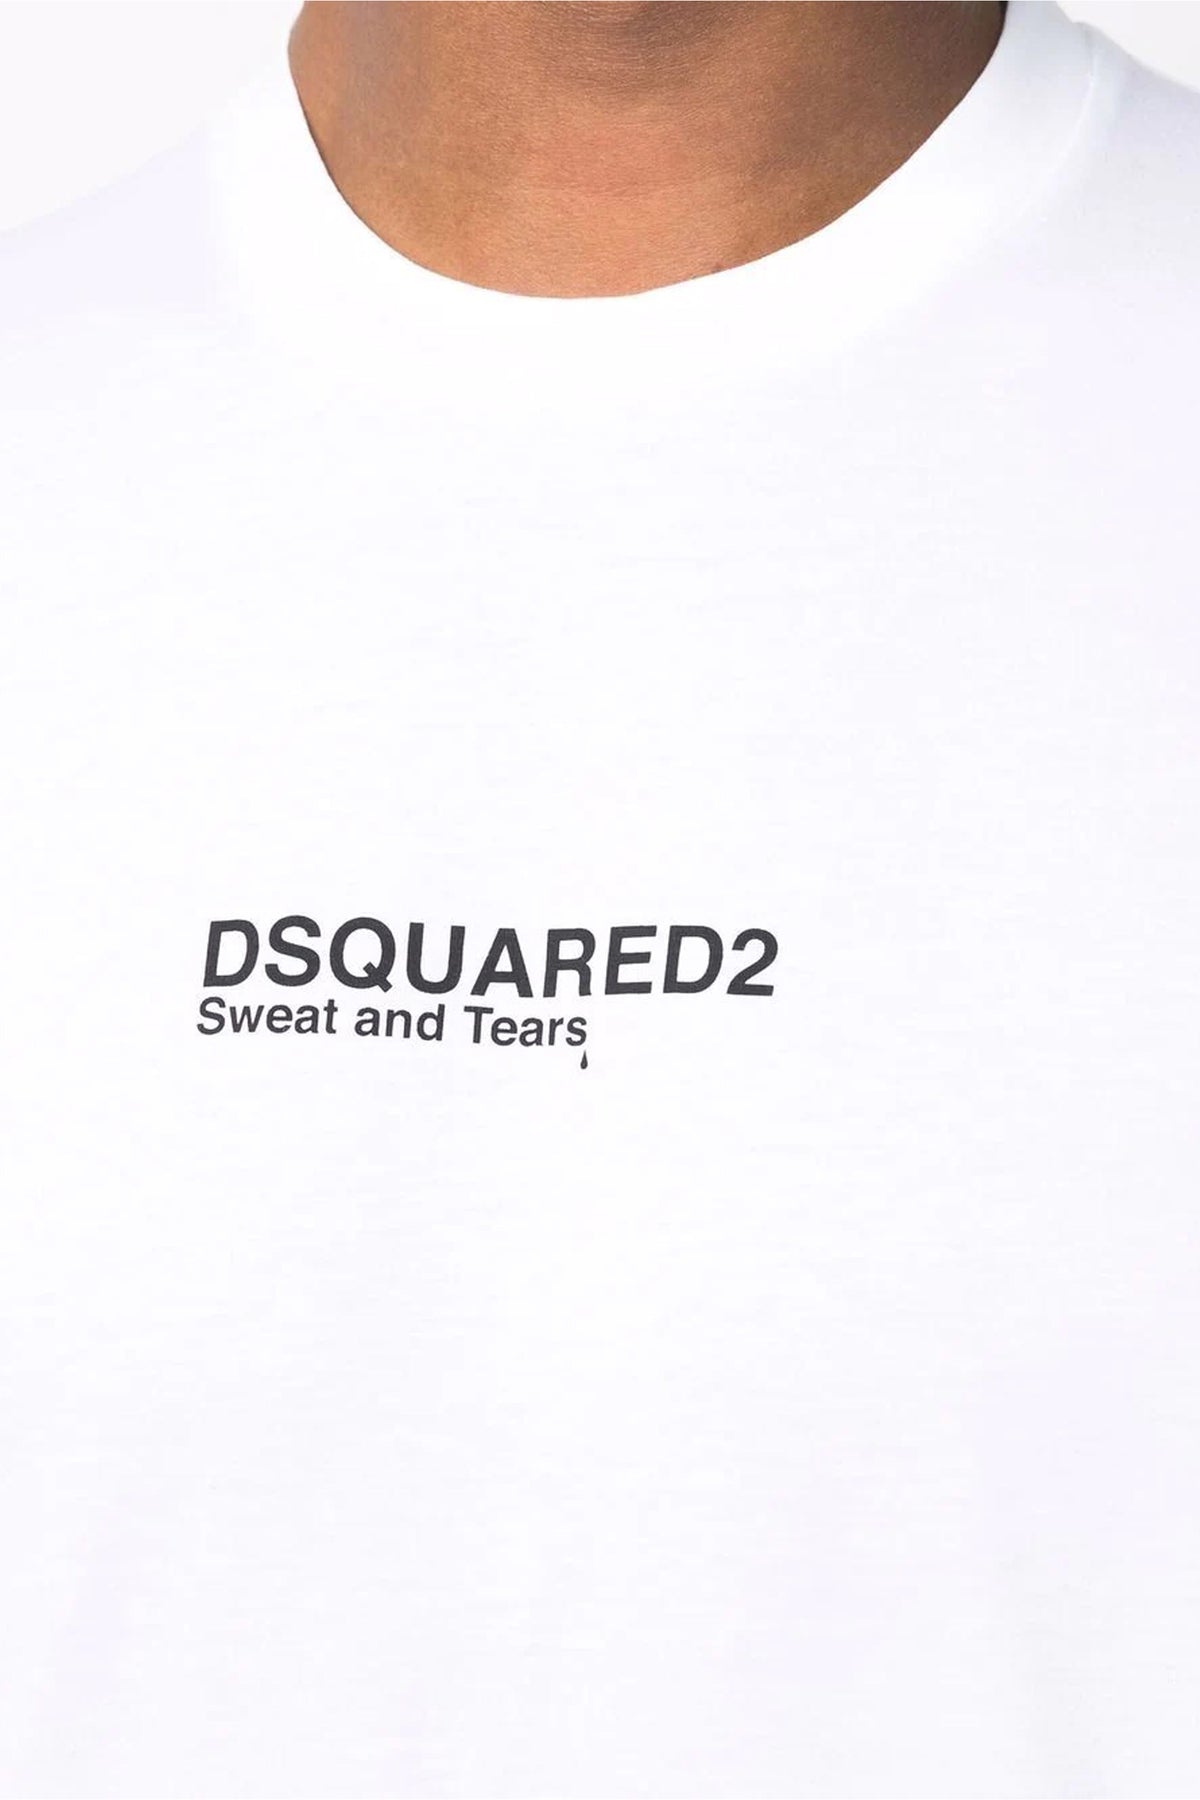 Dsquared2 logo crew-neck T-shirt